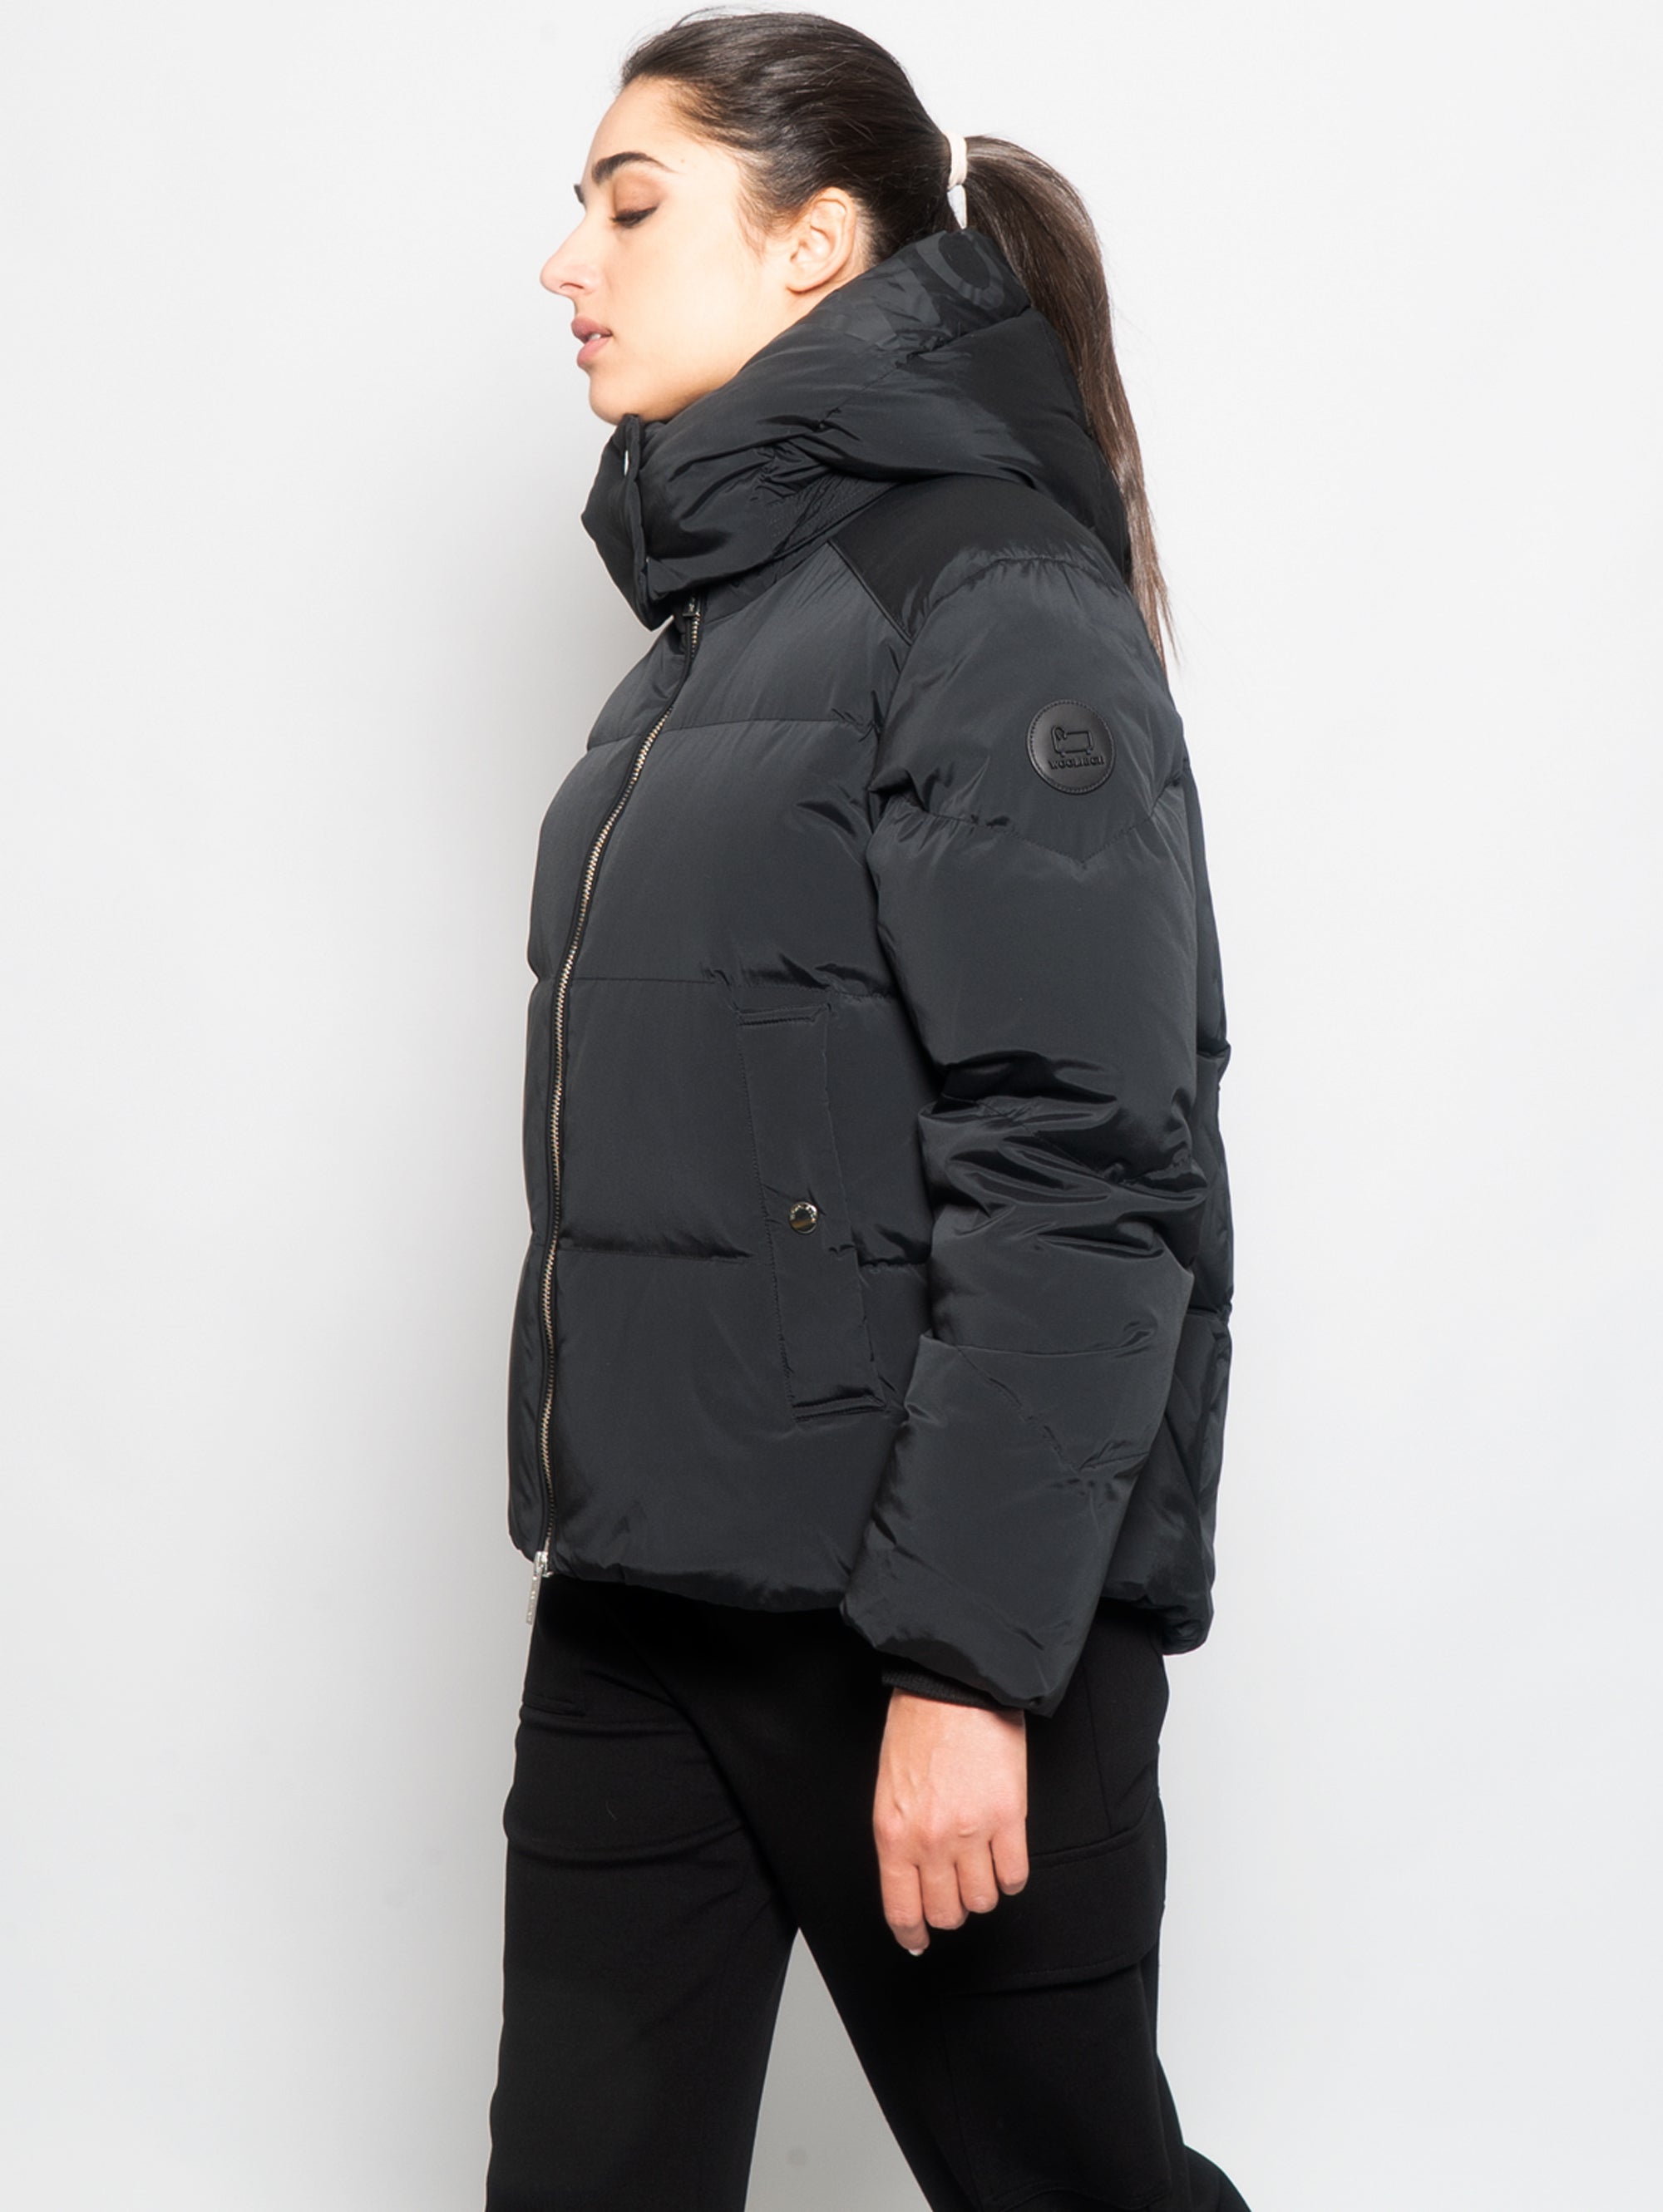 Alsea Short Down Jacket with Detachable Hood in Black